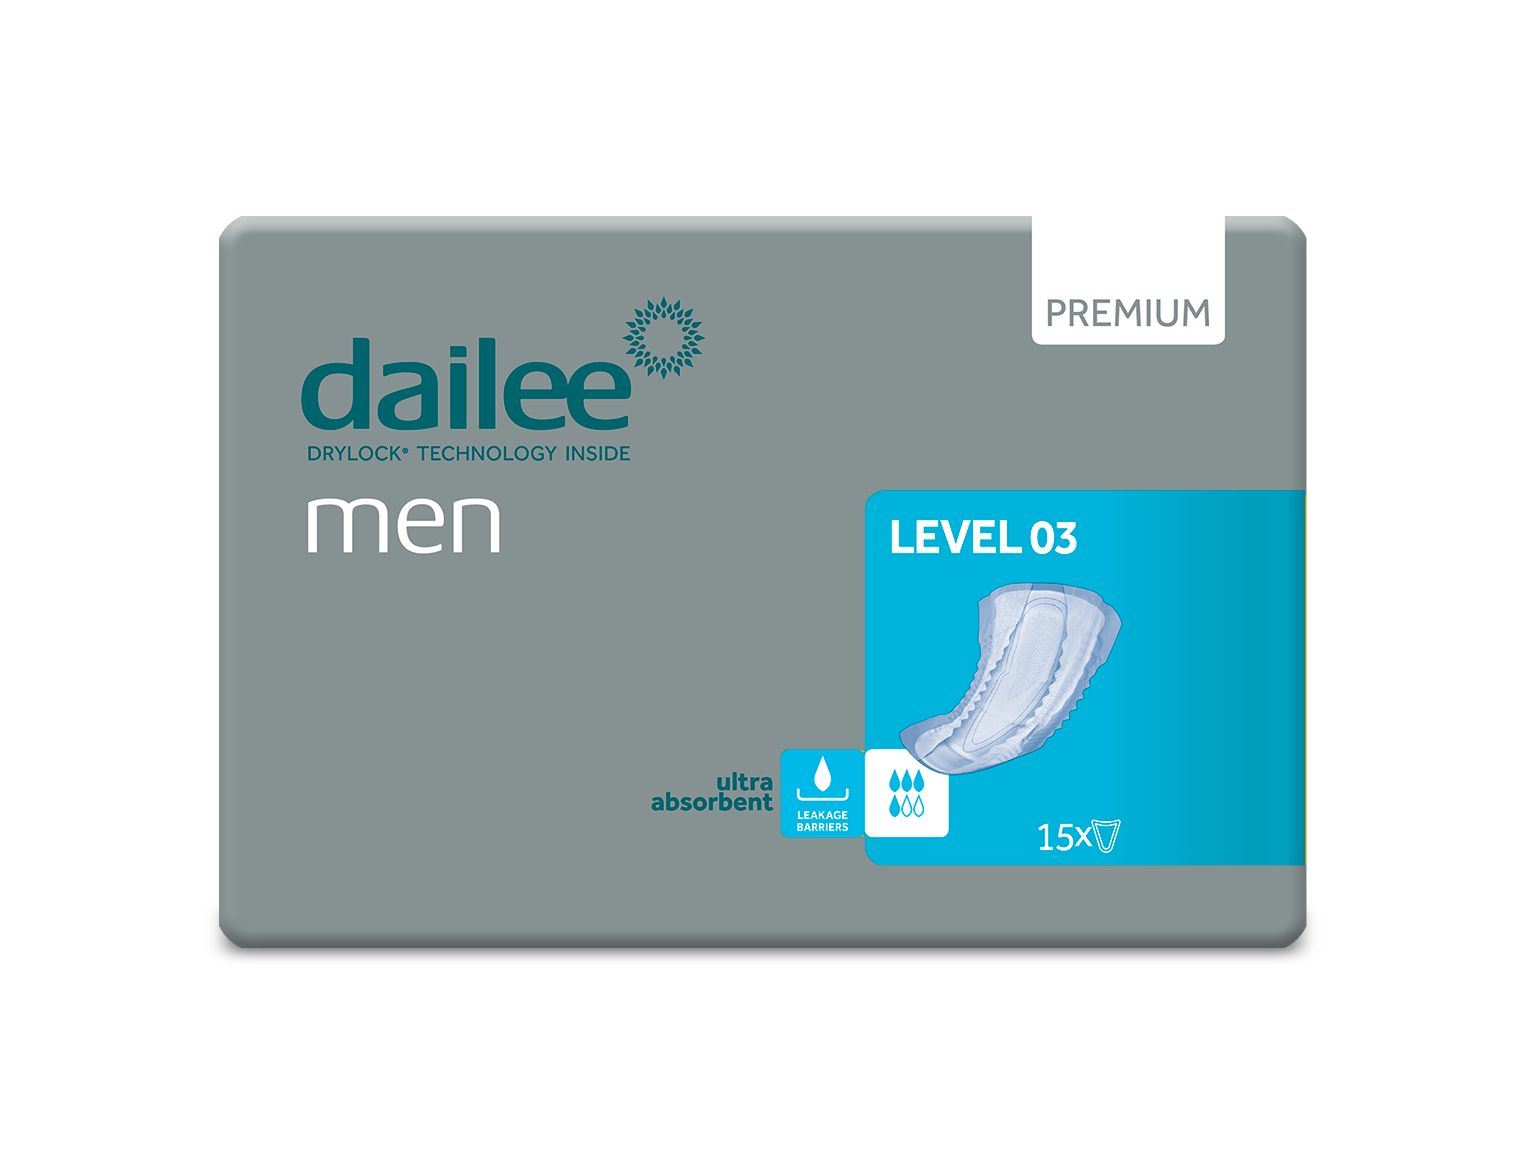 dailee_men_premium_level_03_thumb.